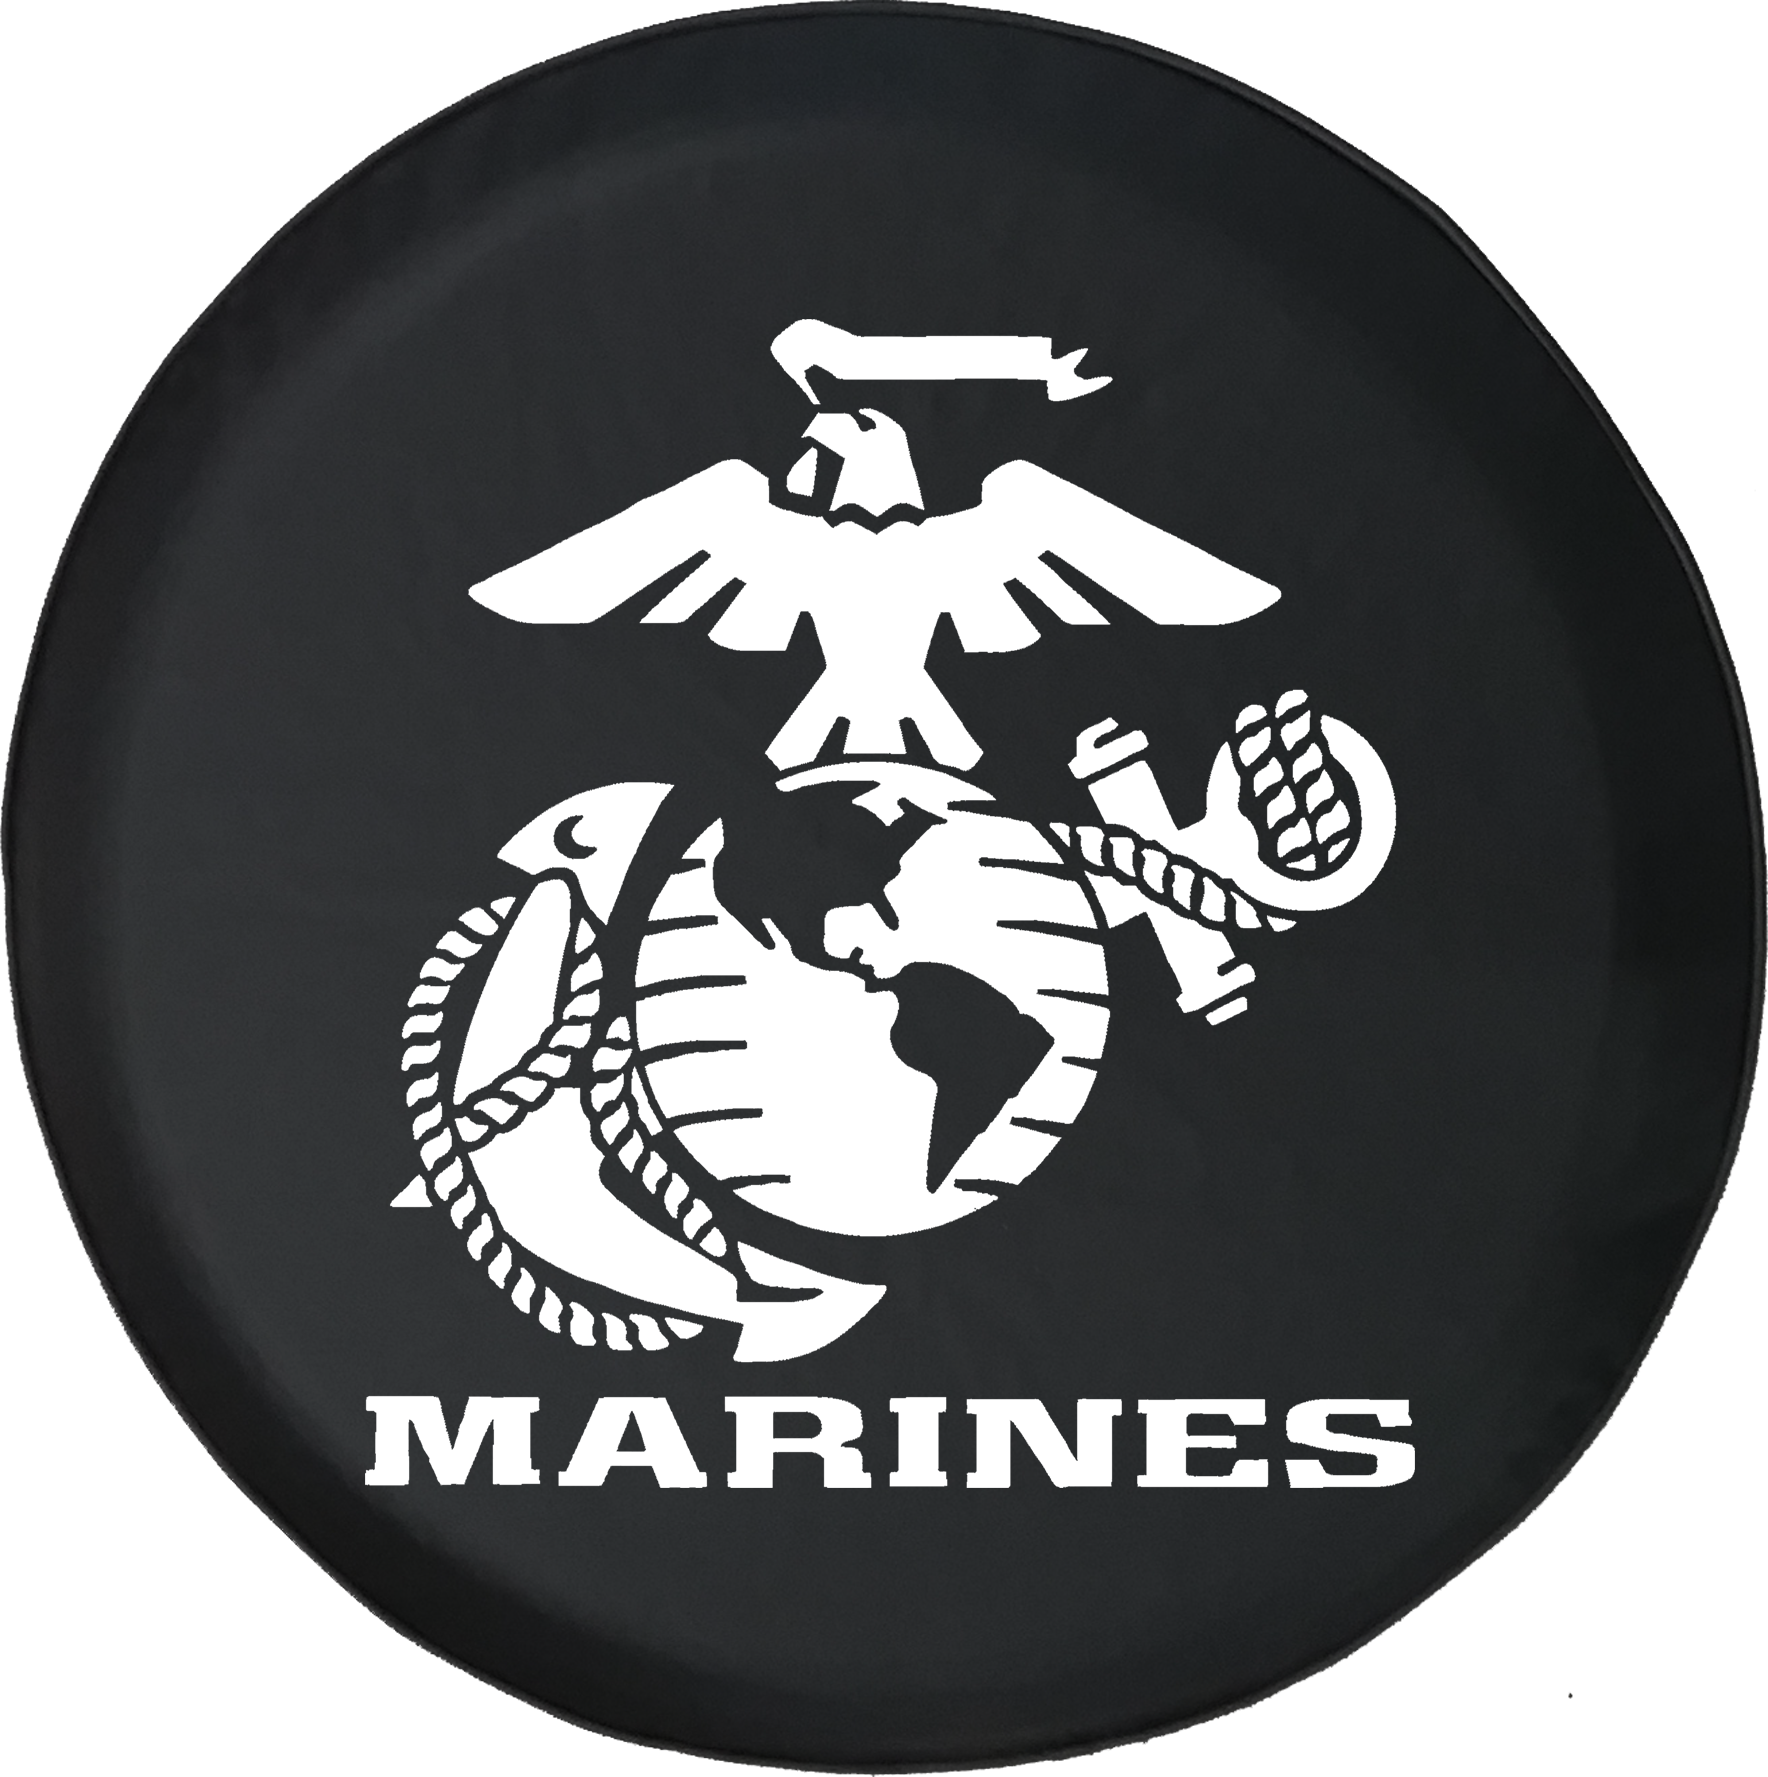 us marines logo black
